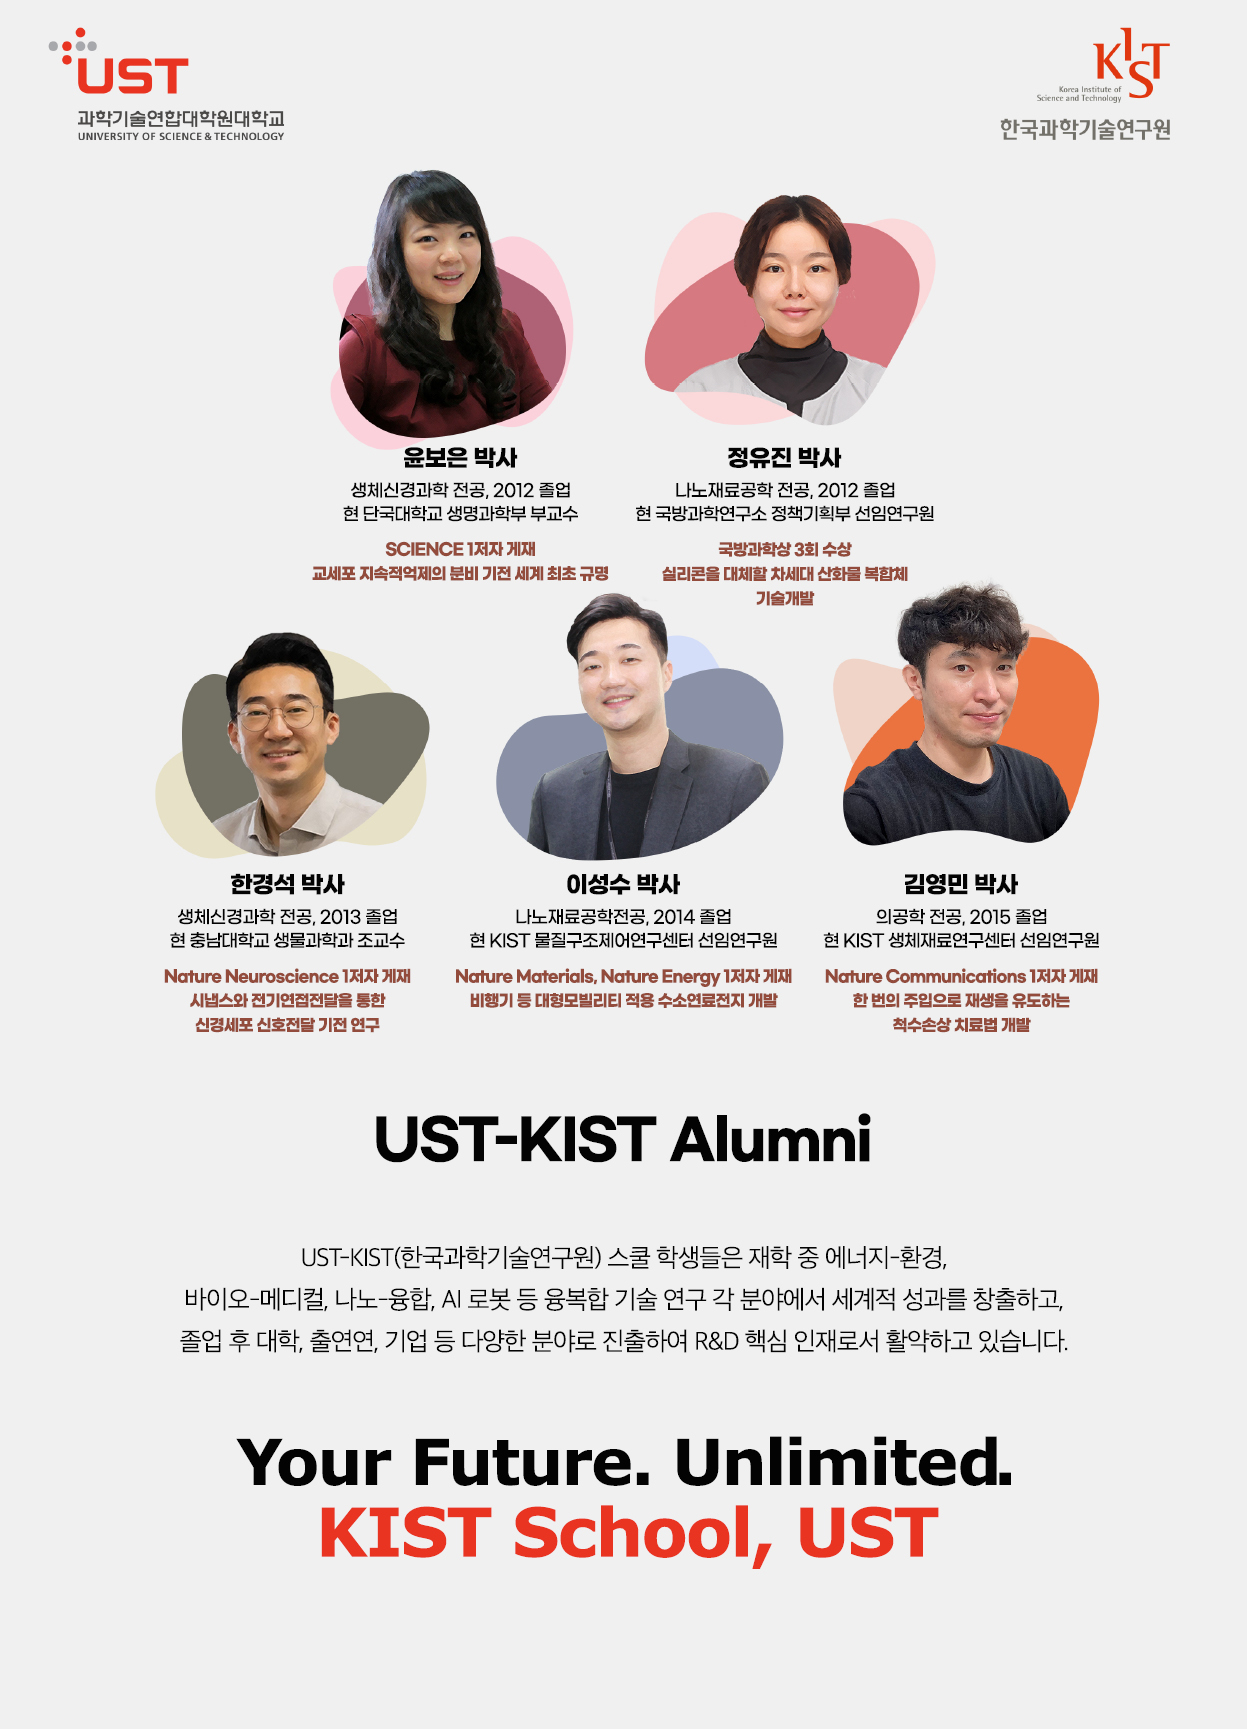 KIST 한국과학기술연구원 캠퍼스 포스터로 자세한내용은 하단에 위치해있습니다.